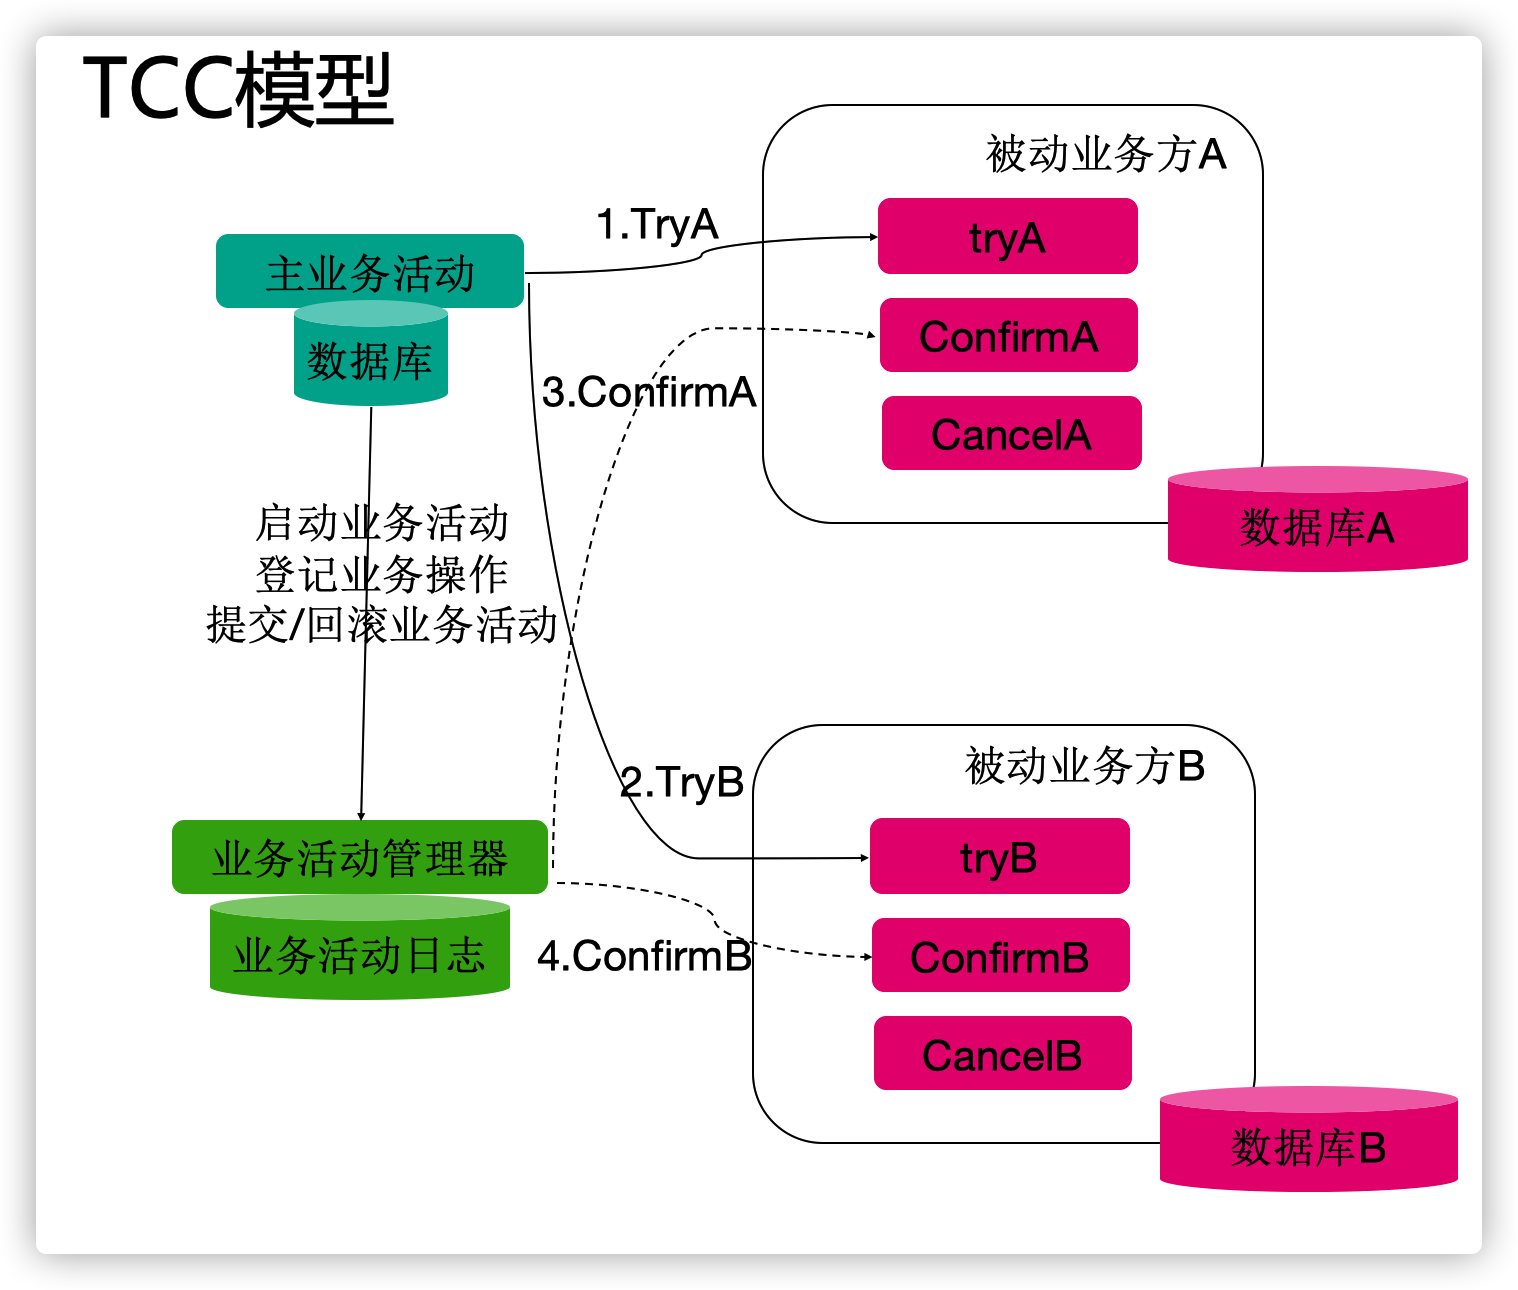 TCC模型原理图